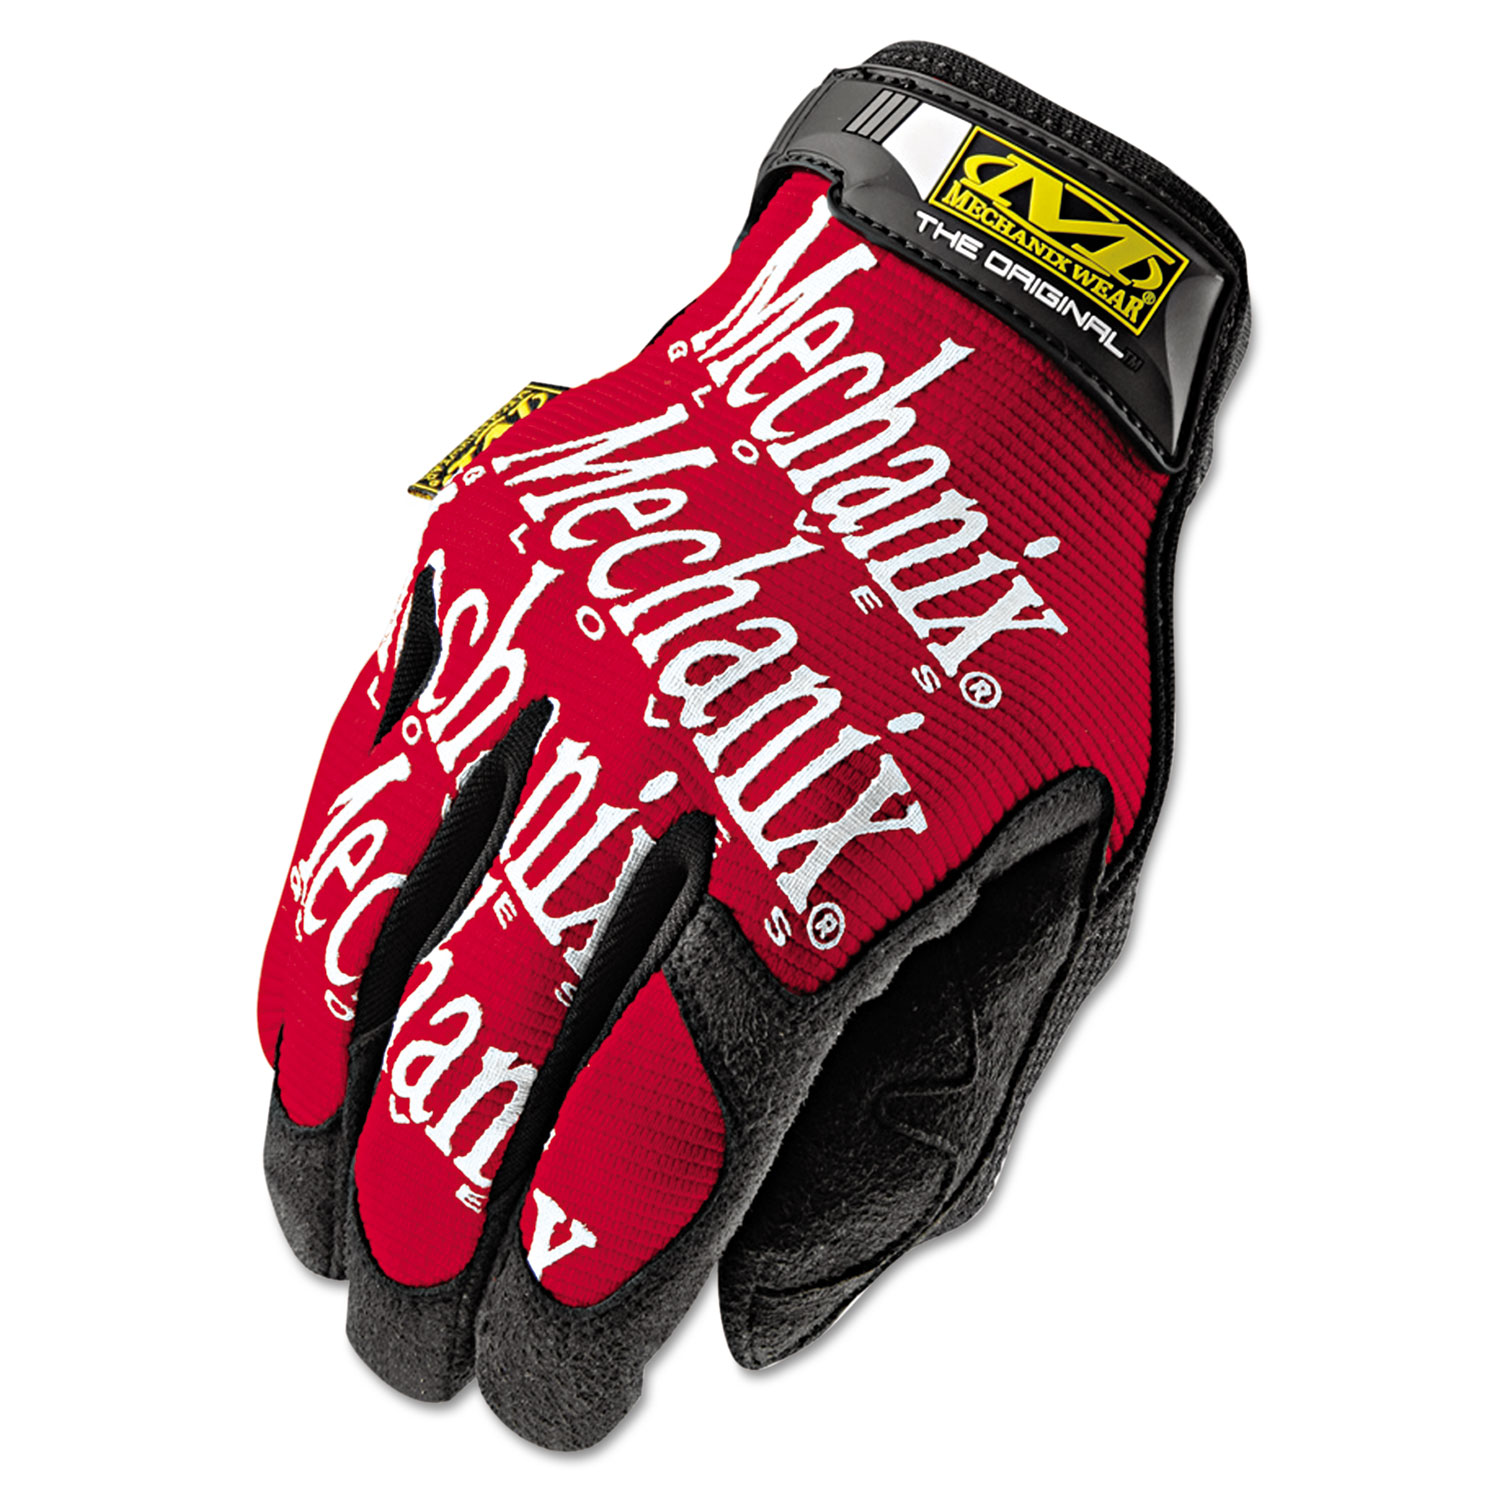  Mechanix Wear MG-02-010 The Original Work Gloves, Red/Black, Large (MNXMG02010) 